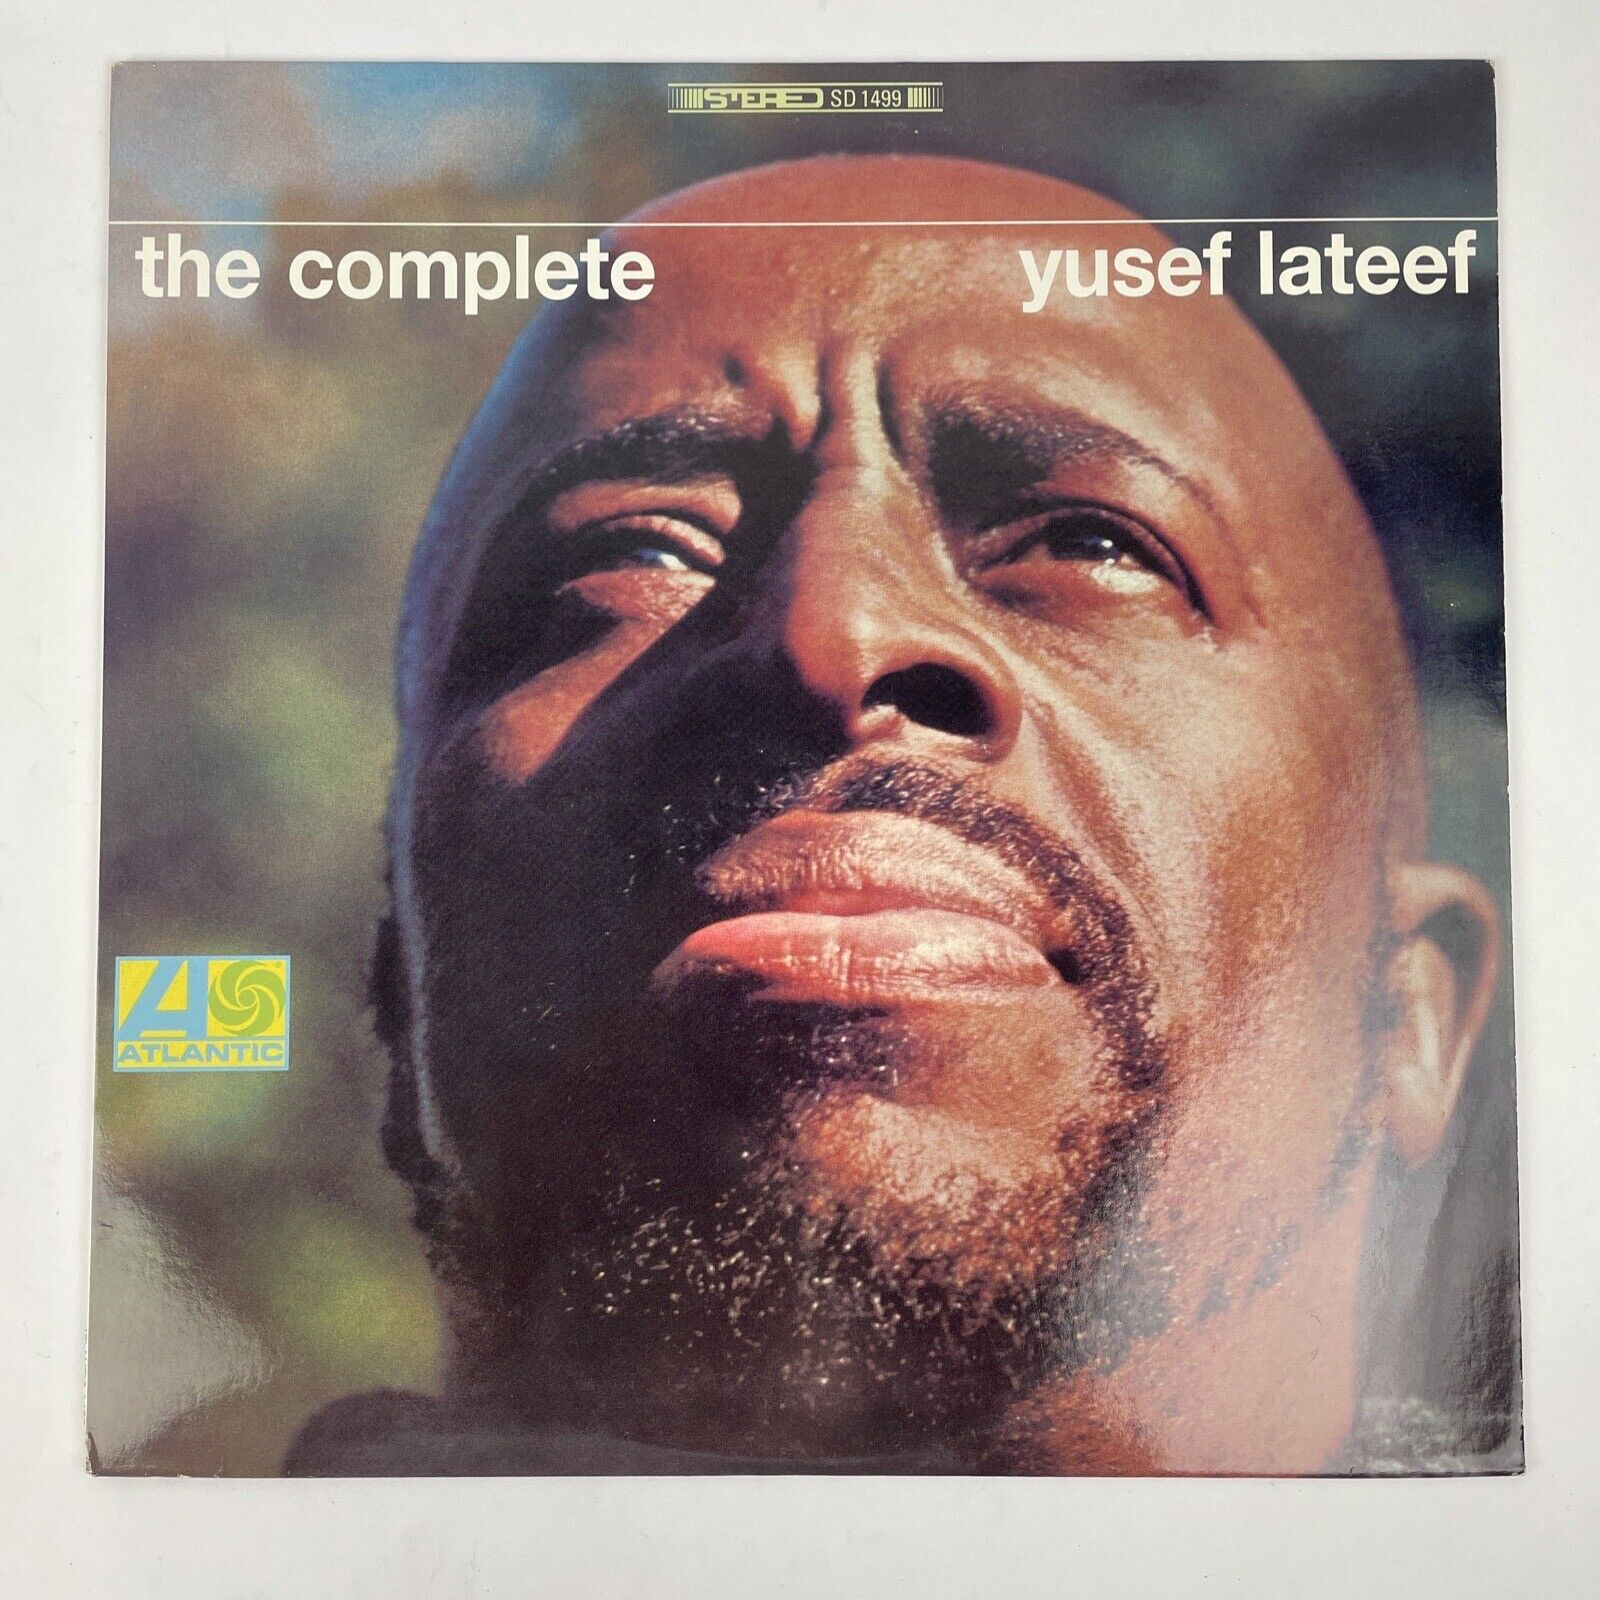 YUSEF LATEEF : The Complete yusef lateef SD 1499 Vinyl LP Atlantic Records LOOK